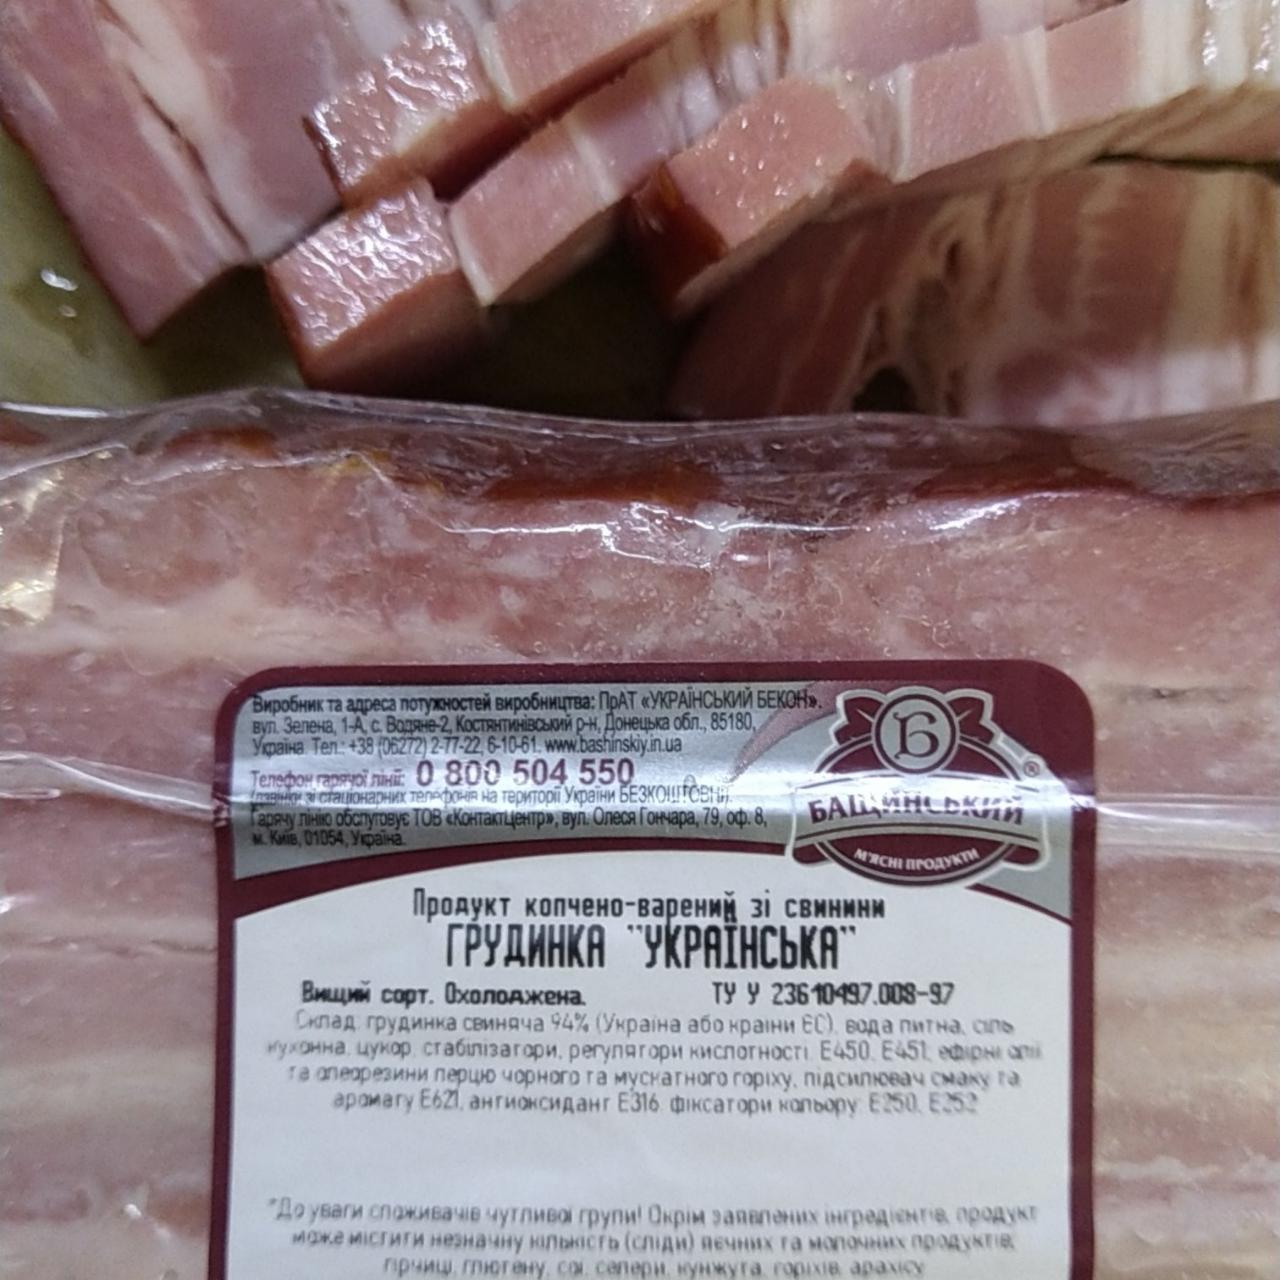 Familien-packung frische schweine minutensteaks цінність ⋙TablycjaKalorijnosti калорійність, харчова Metzgerfrisch 